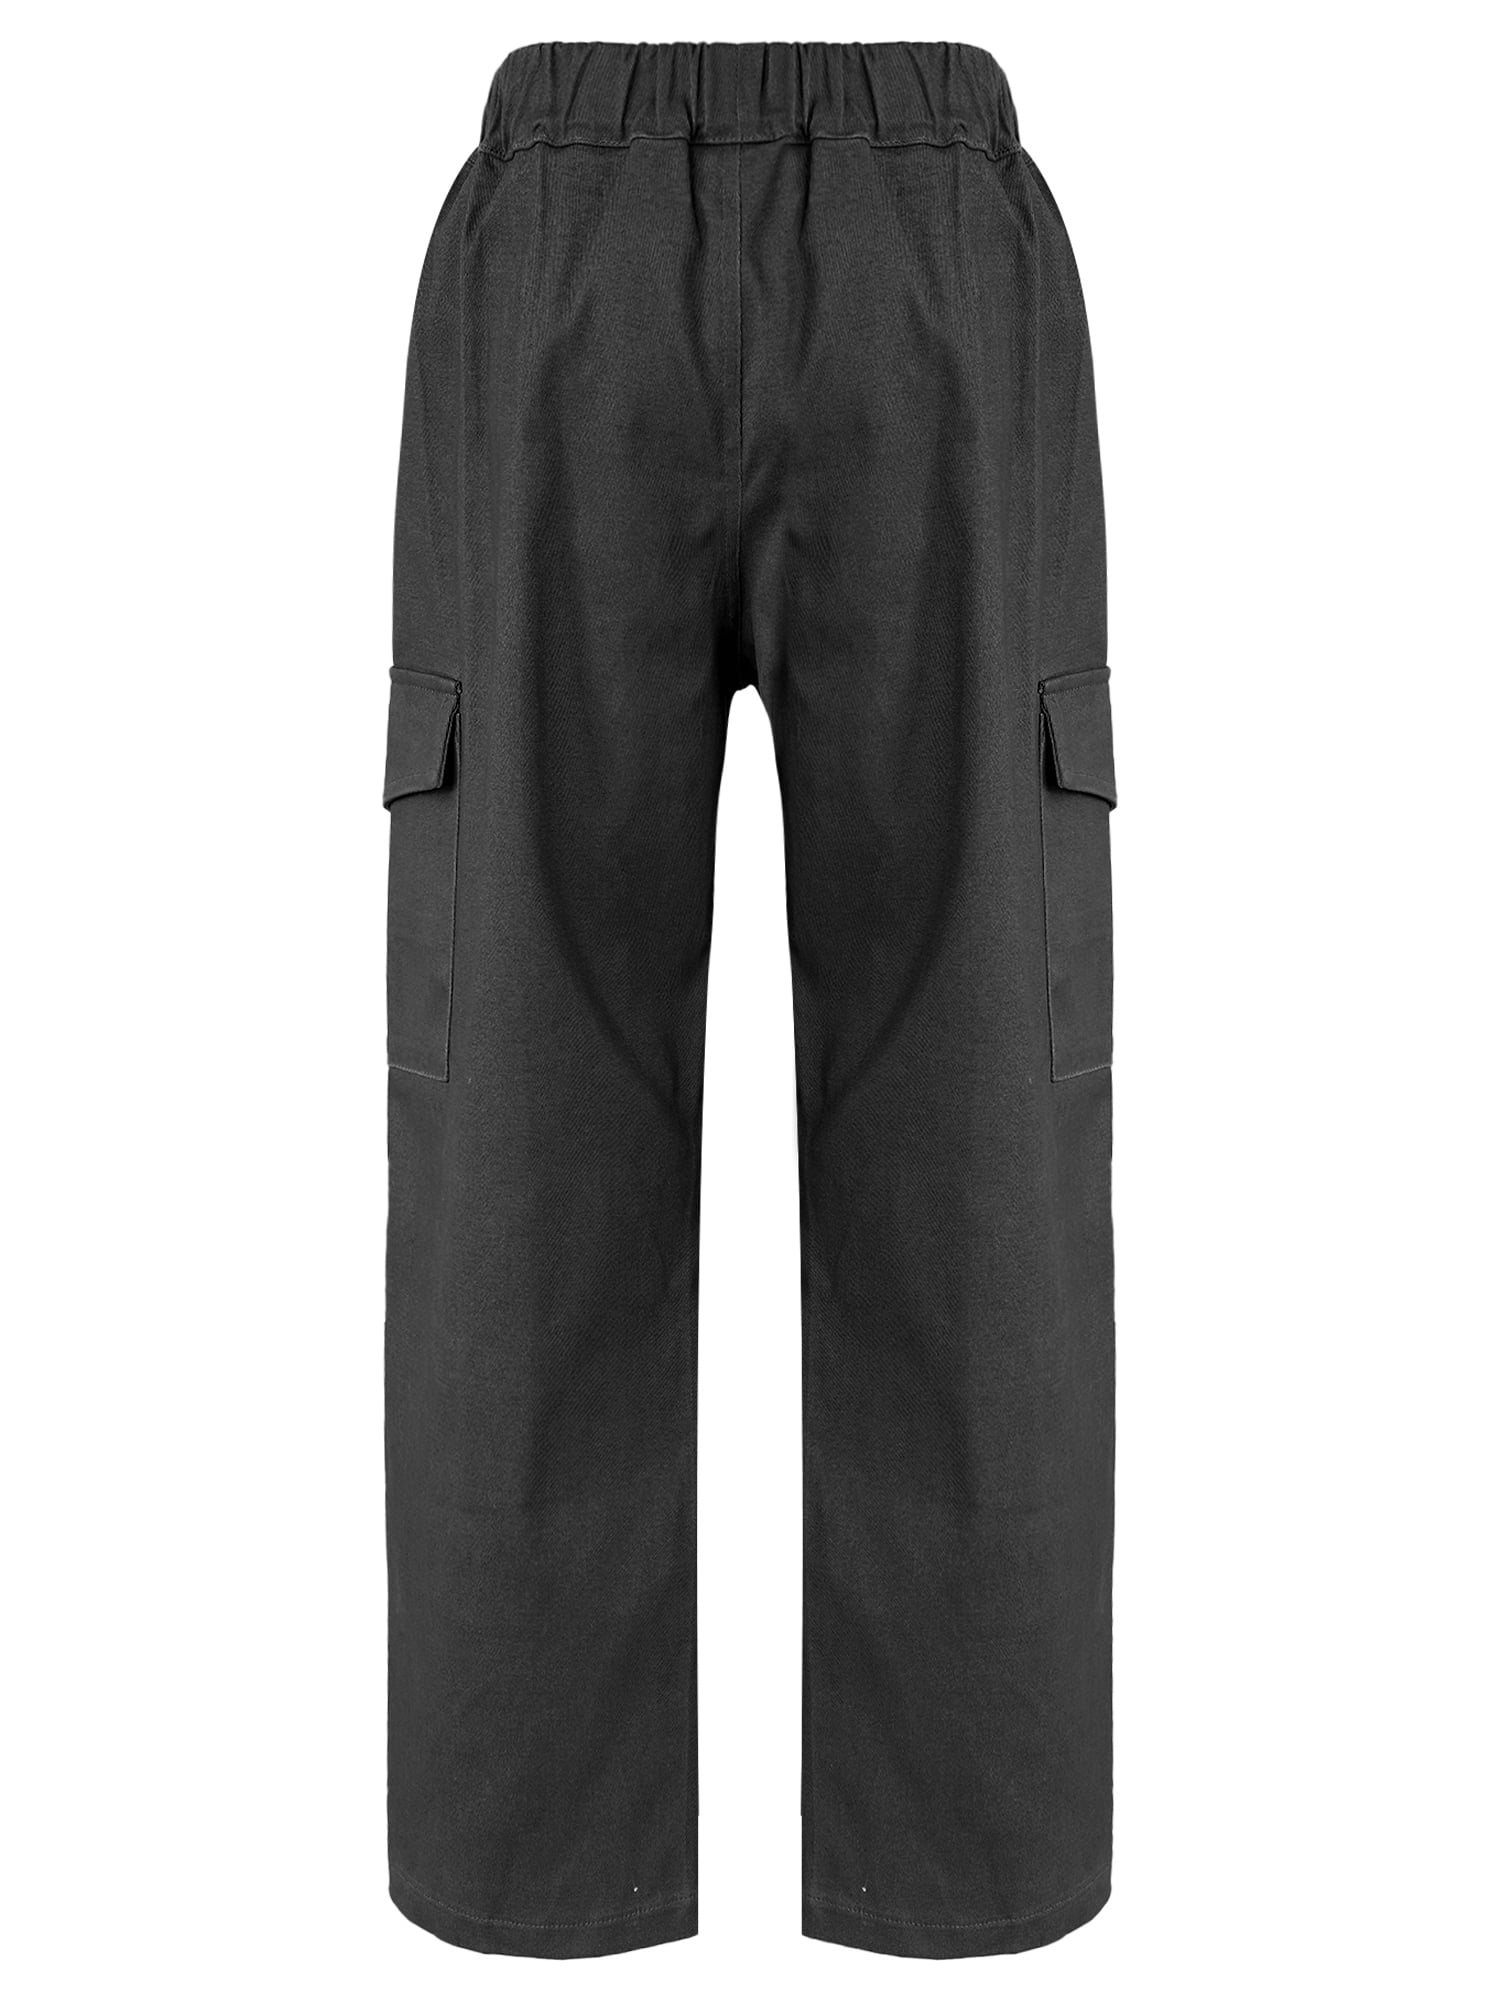 Ardene Denim Cargo Joggers in Black, Size, Polyester/Spandex/Cotton